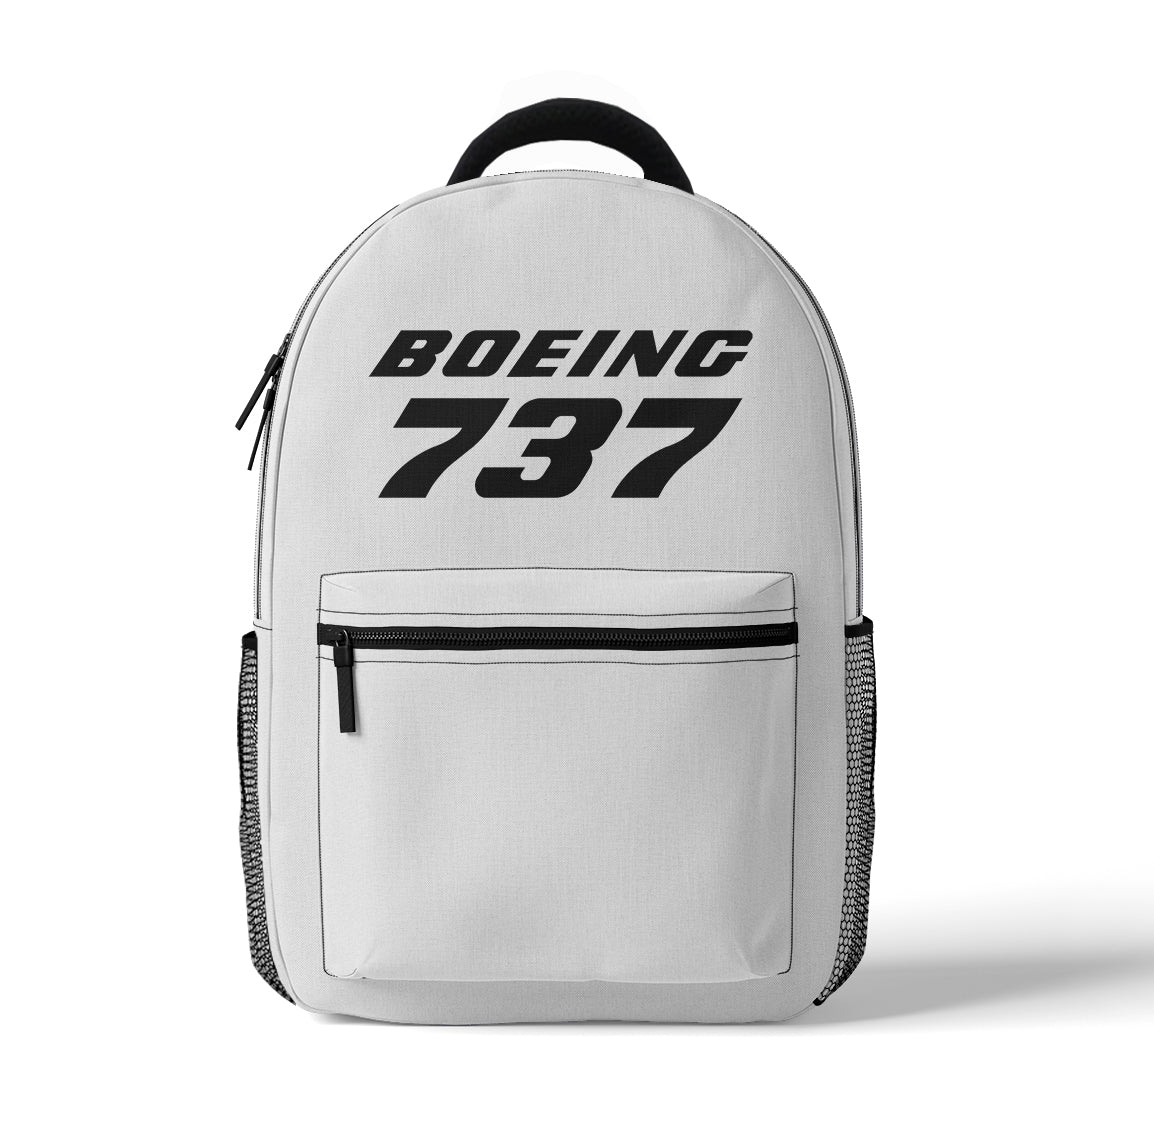 Boeing 737 & Text Designed 3D Backpacks